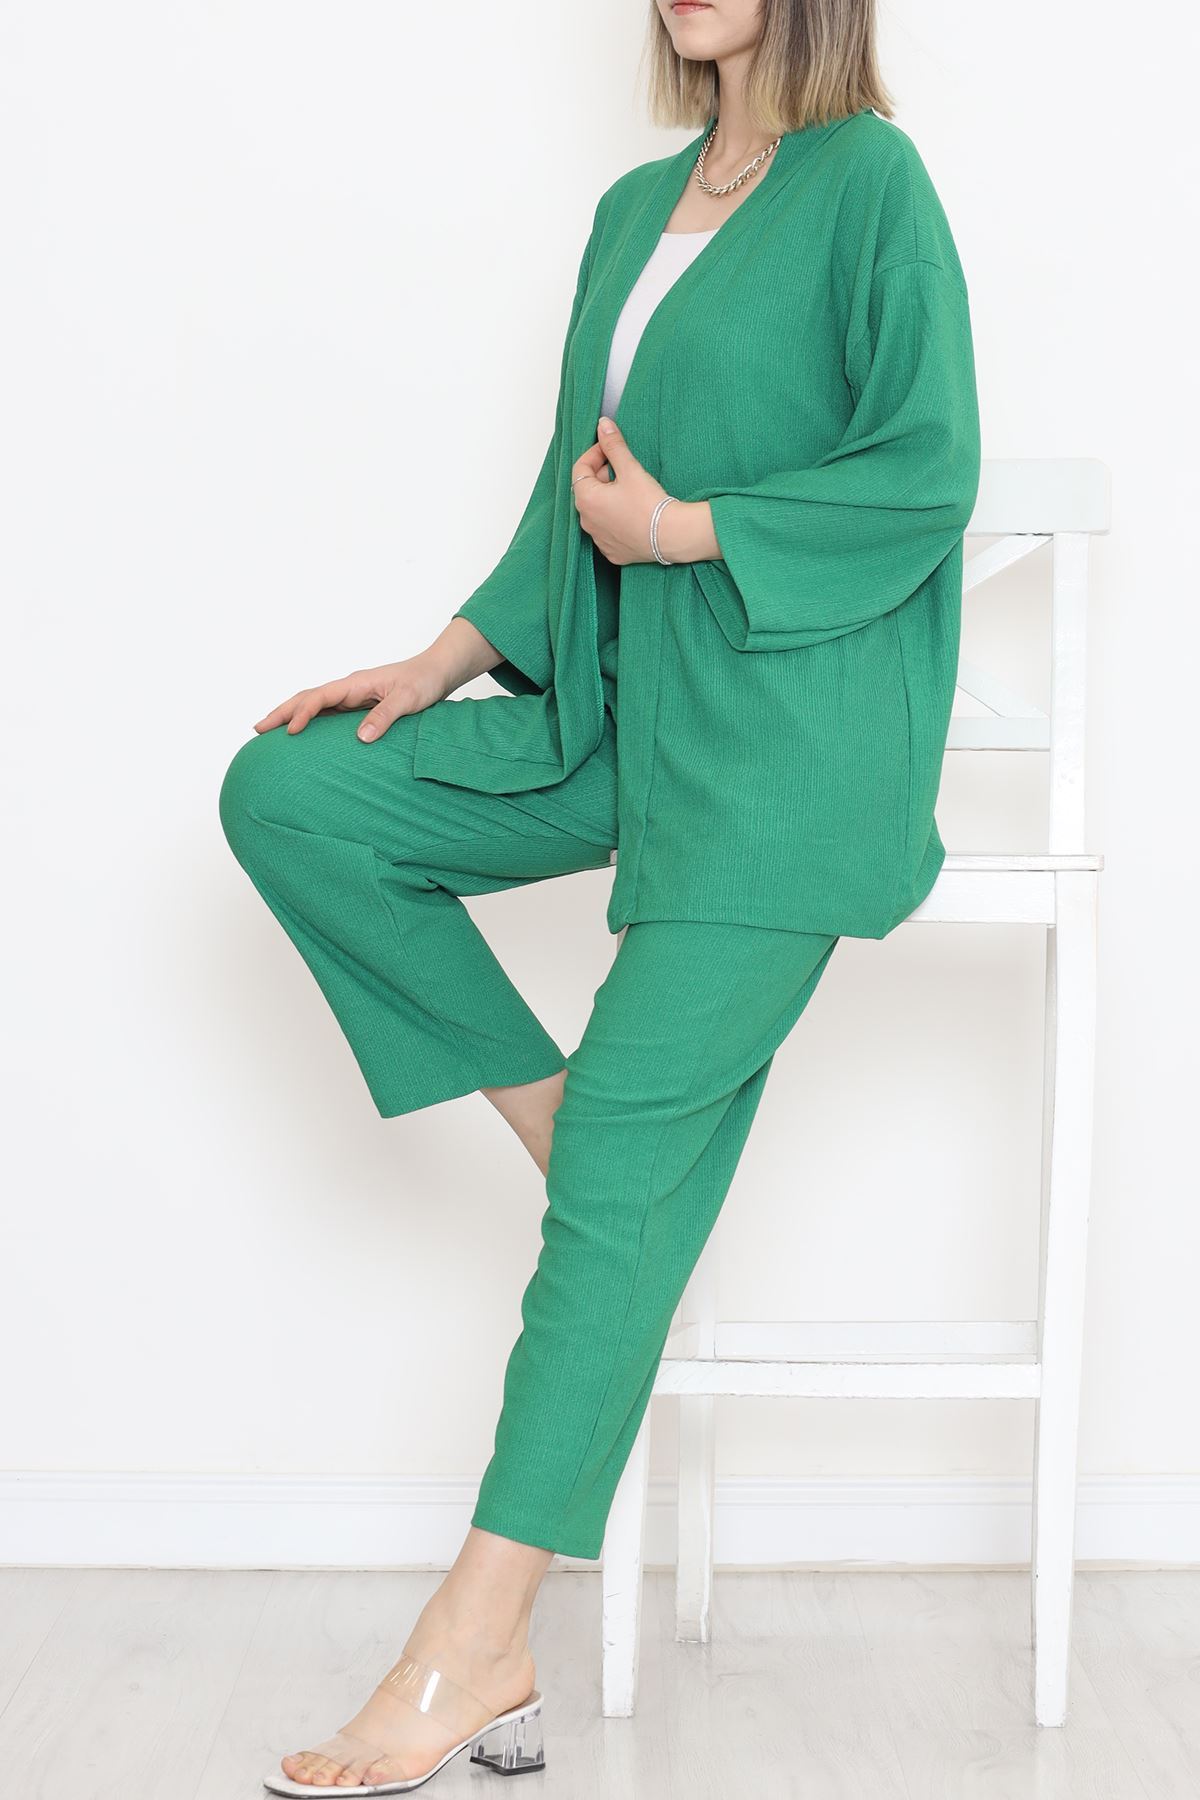 Kimono Takım Yeşil - 12176.1254.